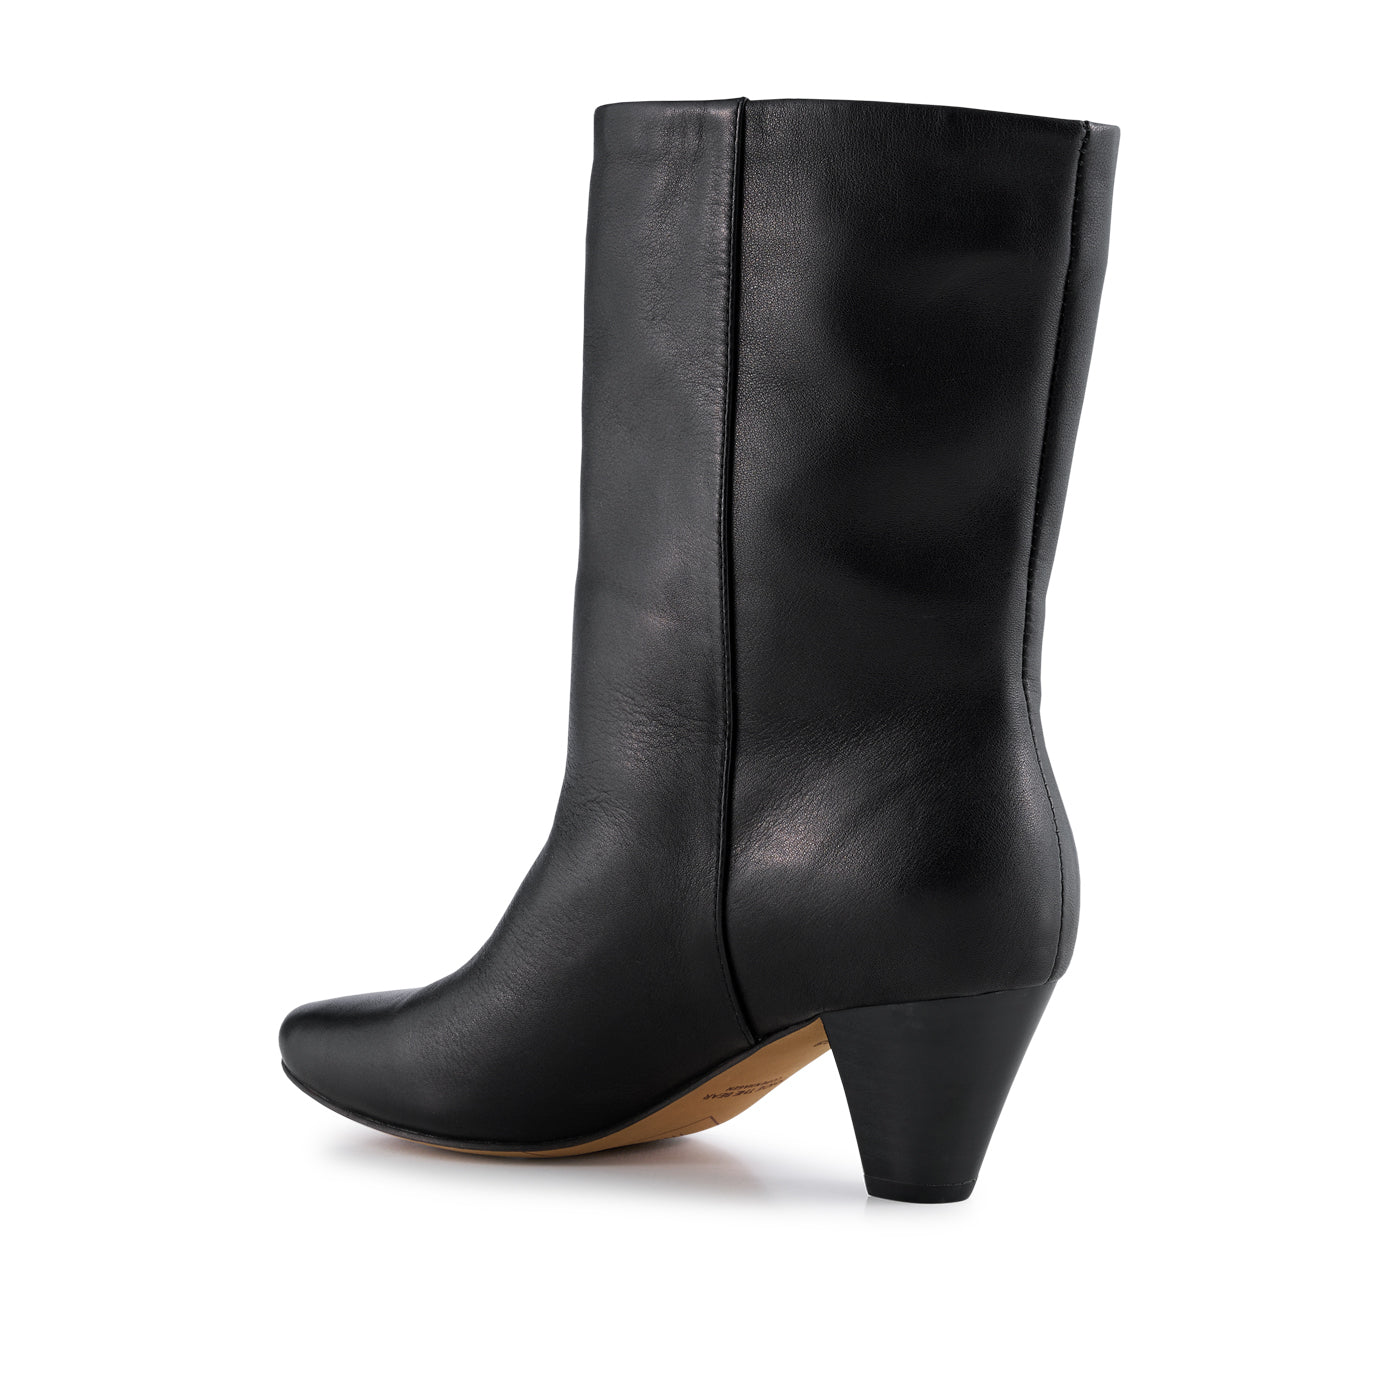 SHOE THE BEAR WOMENS Gita boot leather Boots 110 BLACK